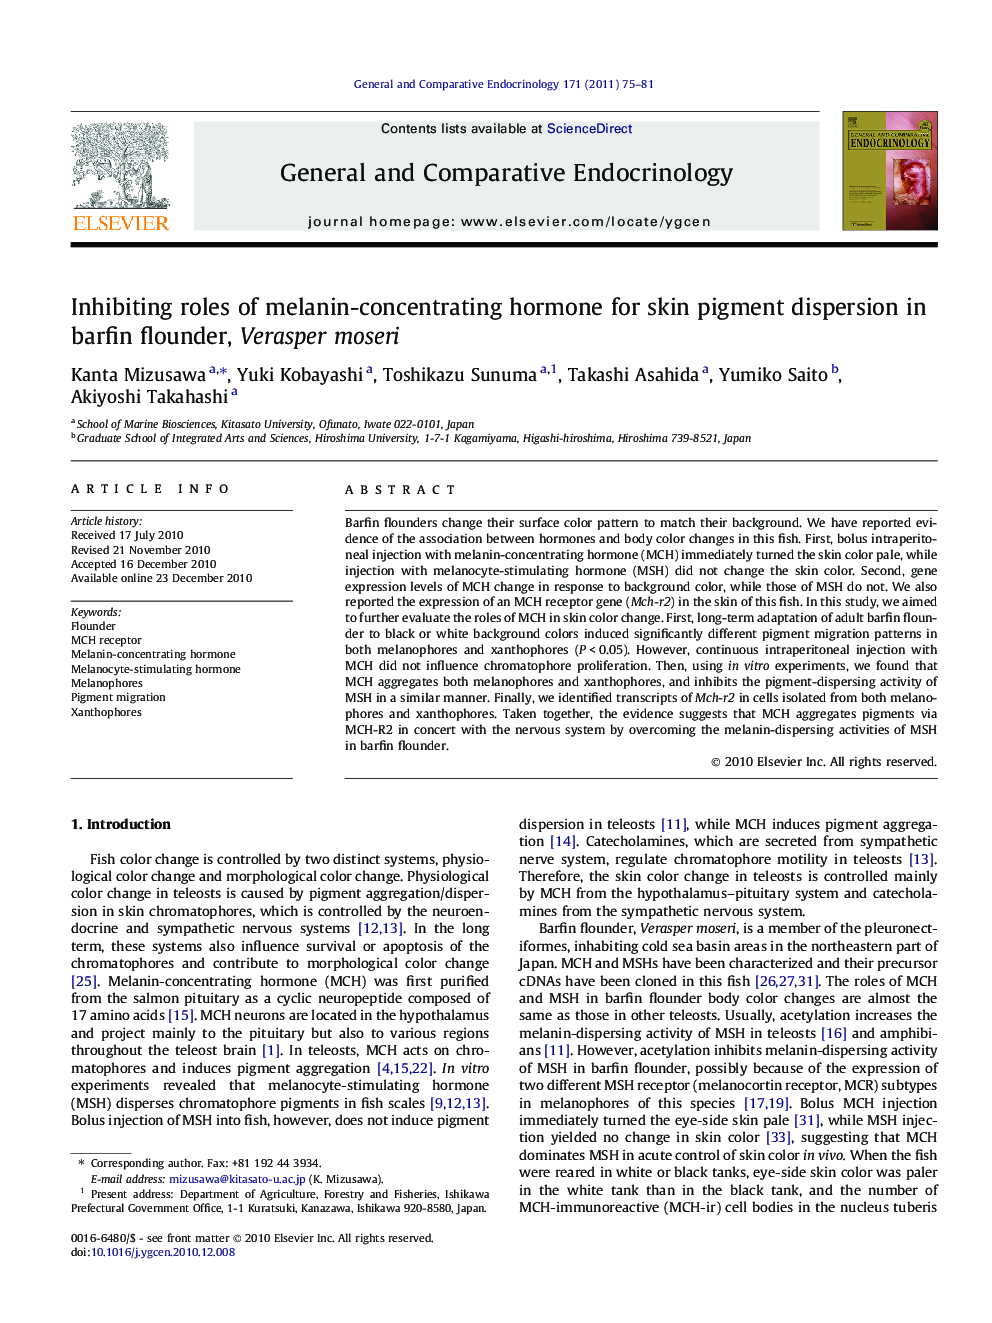 Inhibiting roles of melanin-concentrating hormone for skin pigment dispersion in barfin flounder, Verasper moseri